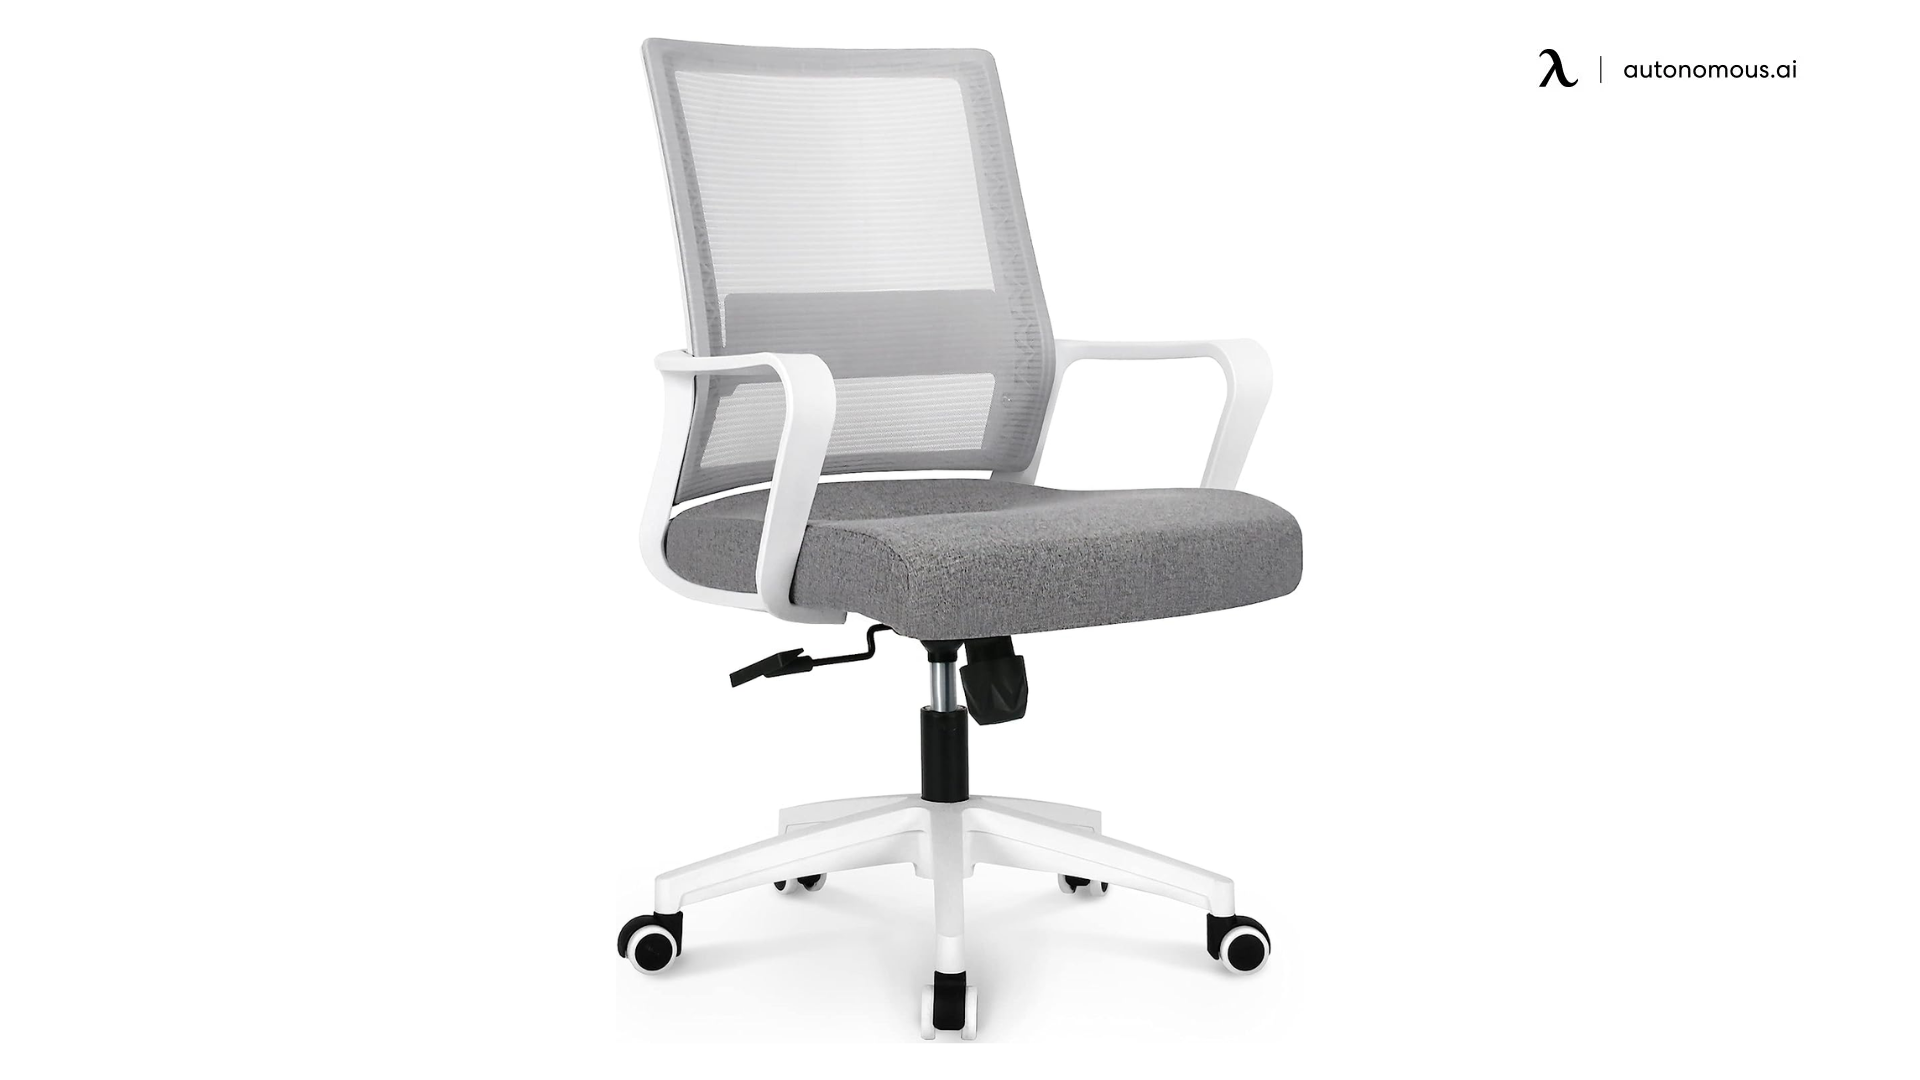 NEO CHAIR Office Chair Ergonomic Desk Chair